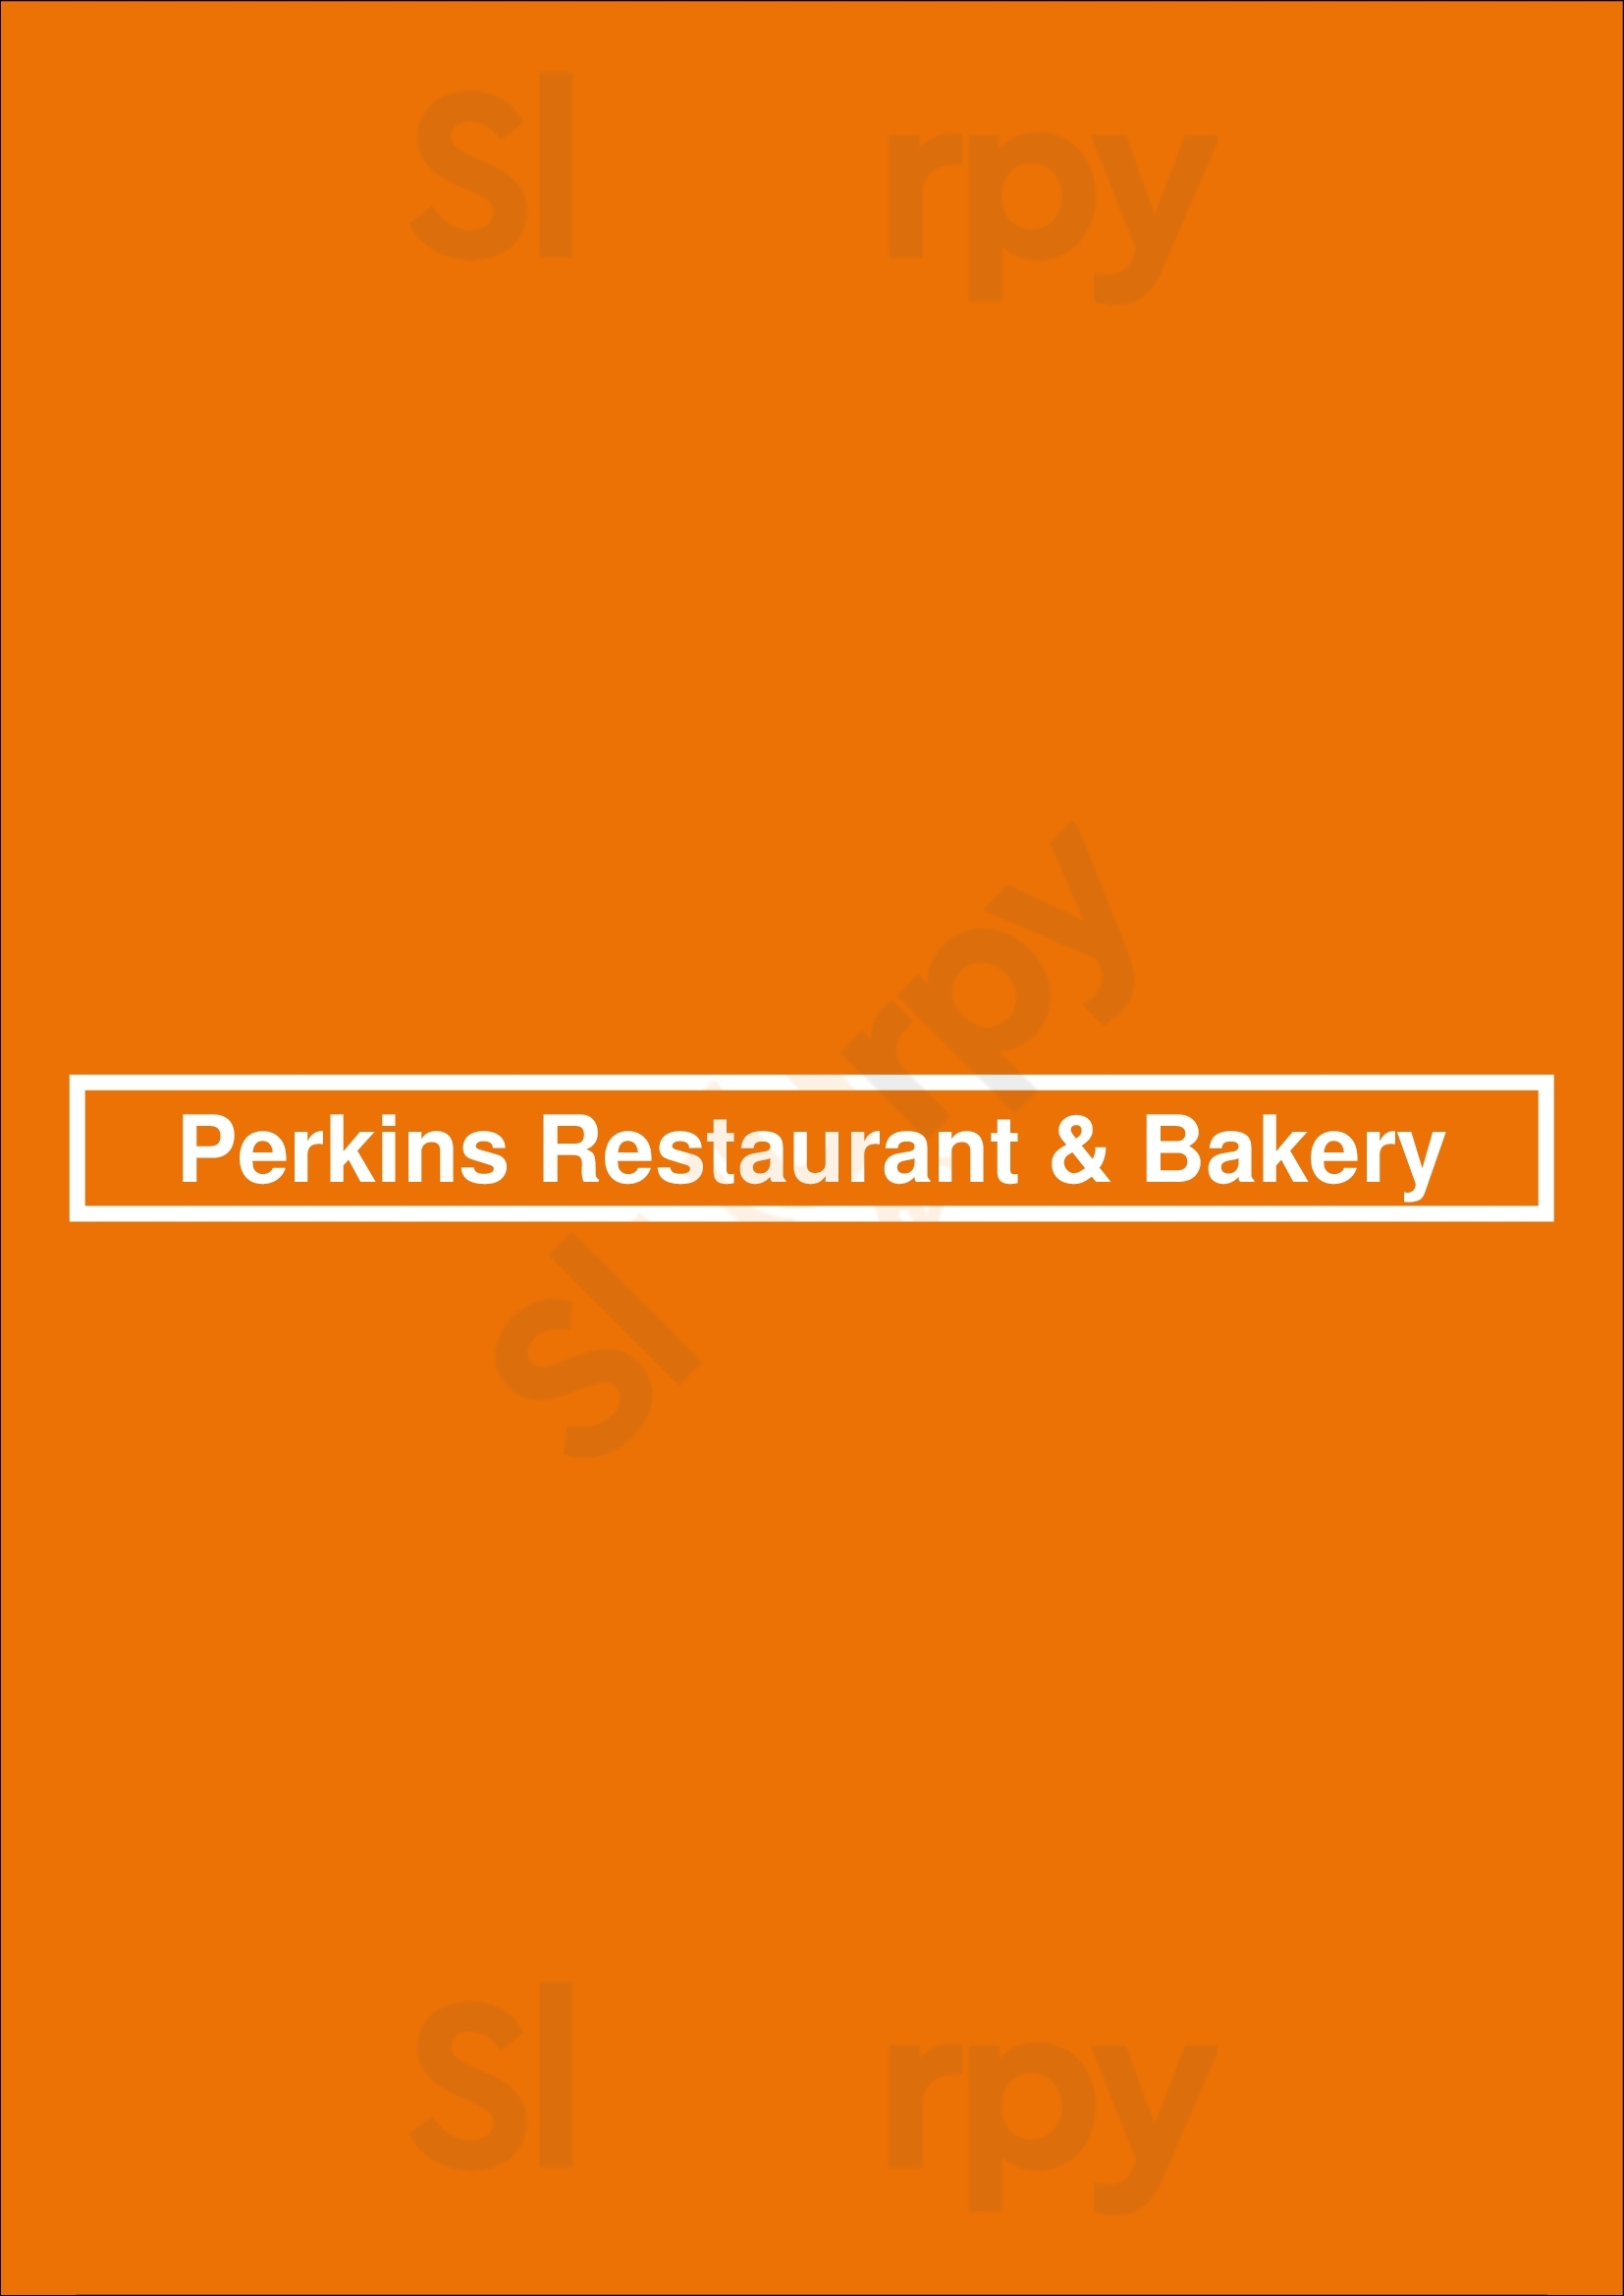 Perkins Restaurant & Bakery Naples Menu - 1